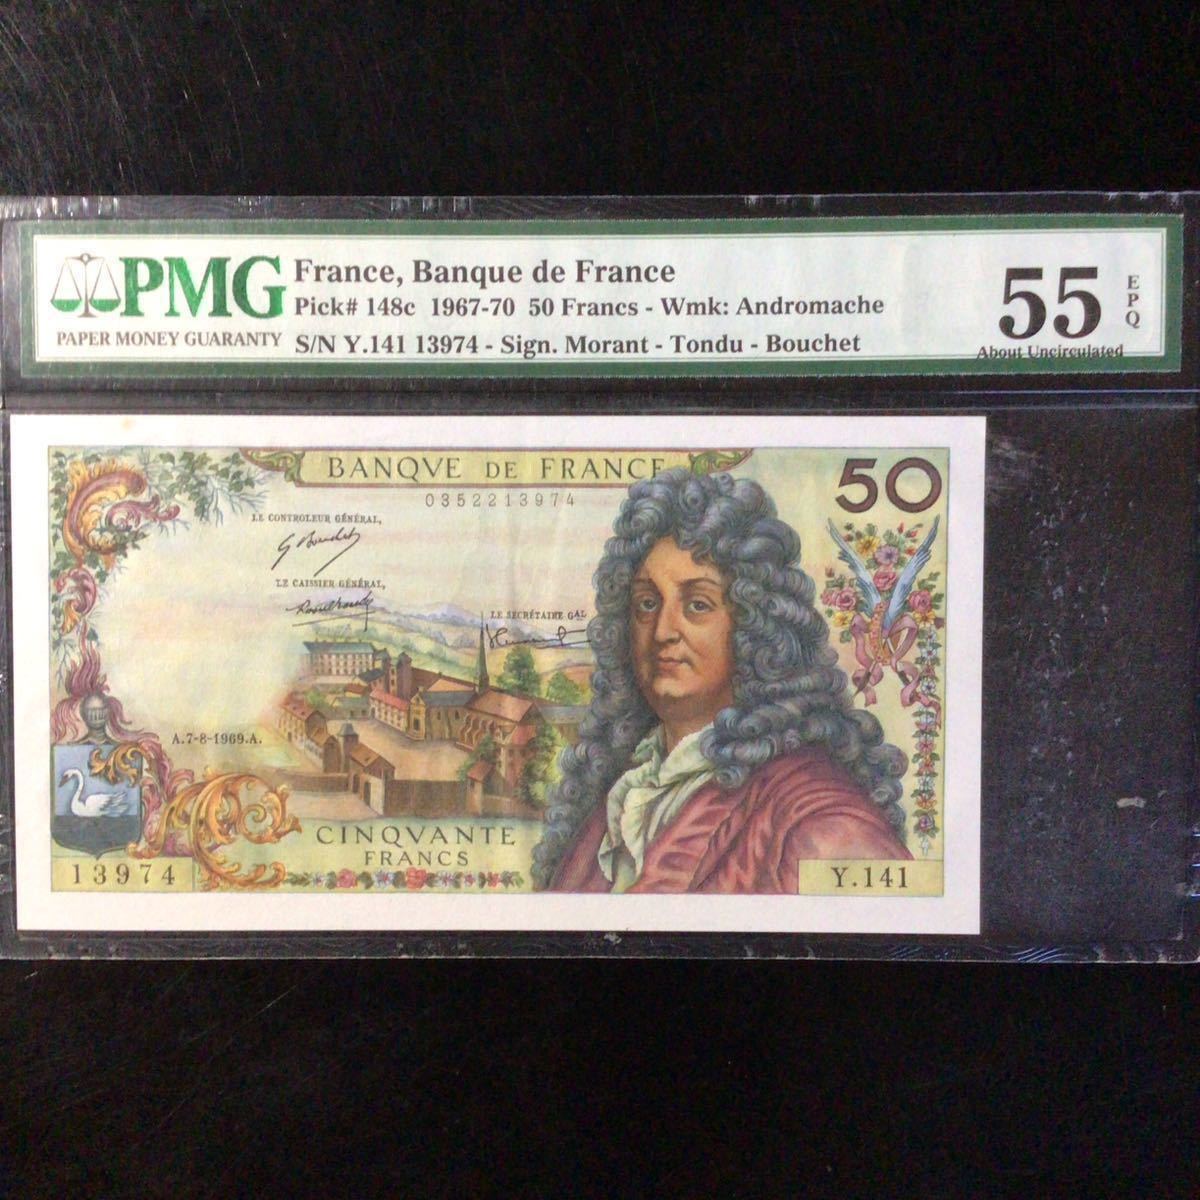 World Banknote Grading FRANCE《Banque de France》50 Francs【1969】『PMG Grading About Uncirculated 55 EPQ』